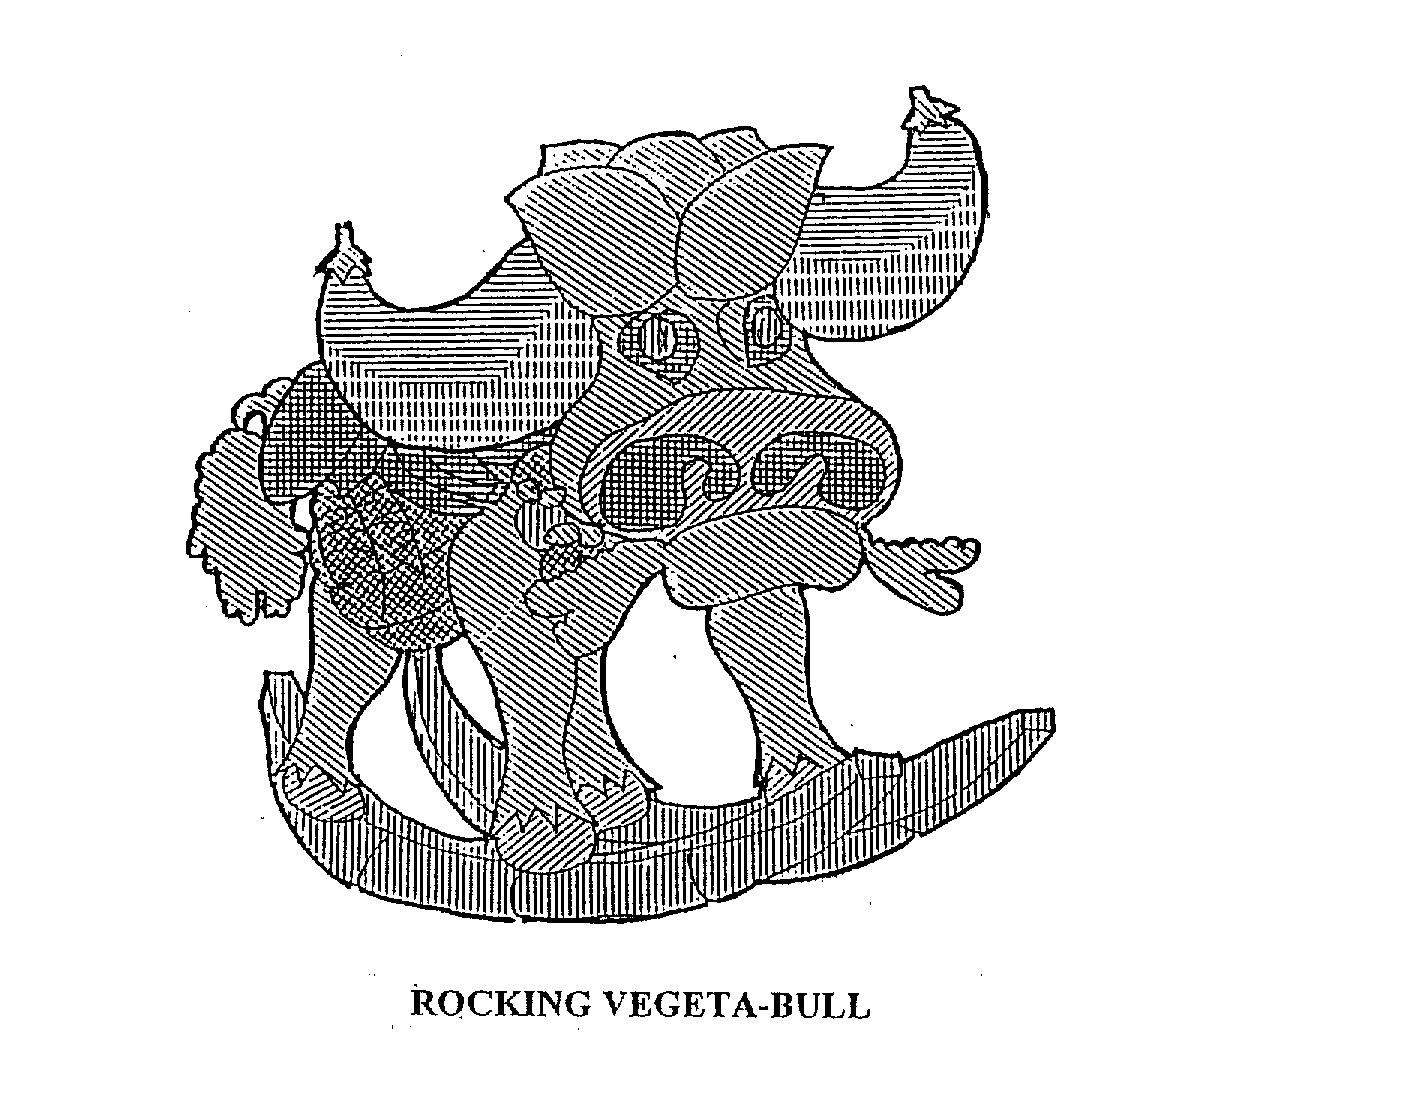  ROCKING VEGETA-BULL